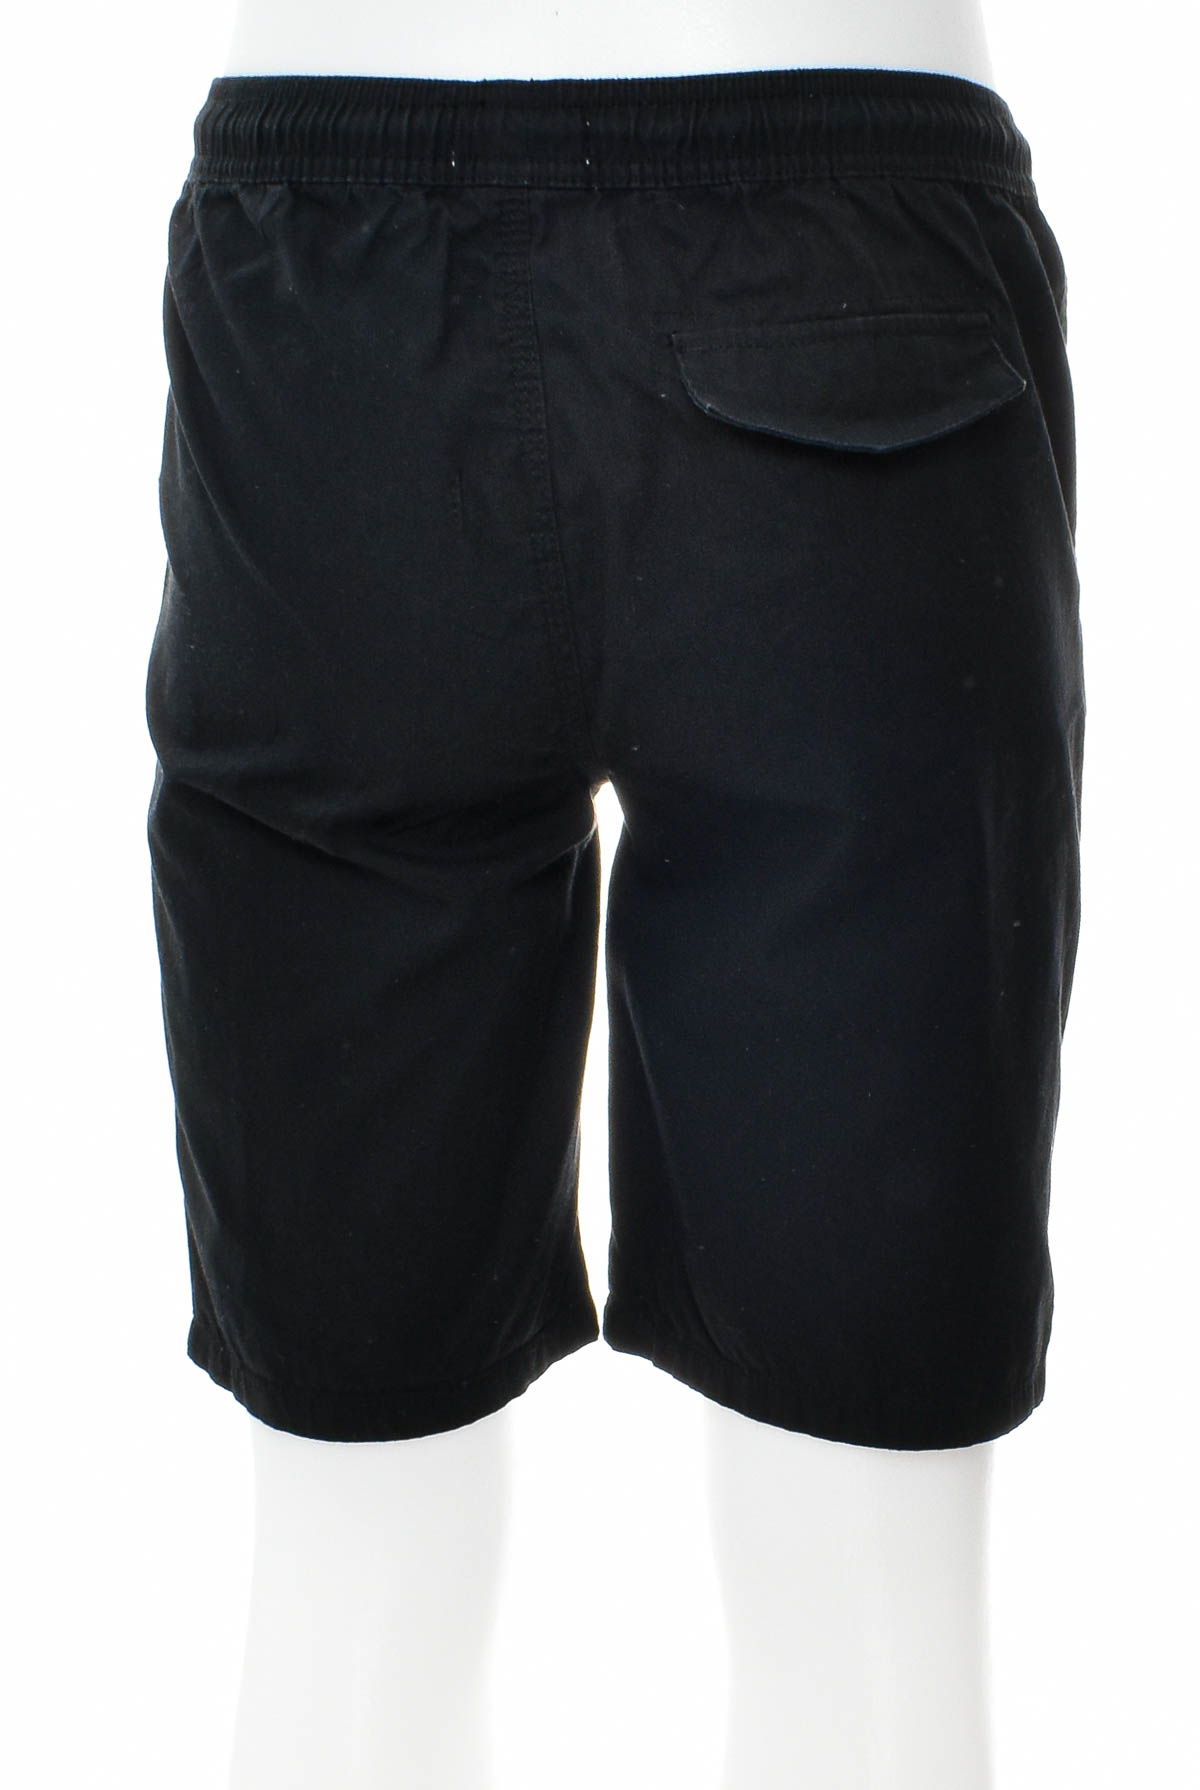 Shorts for boys - PRIMARK - 1